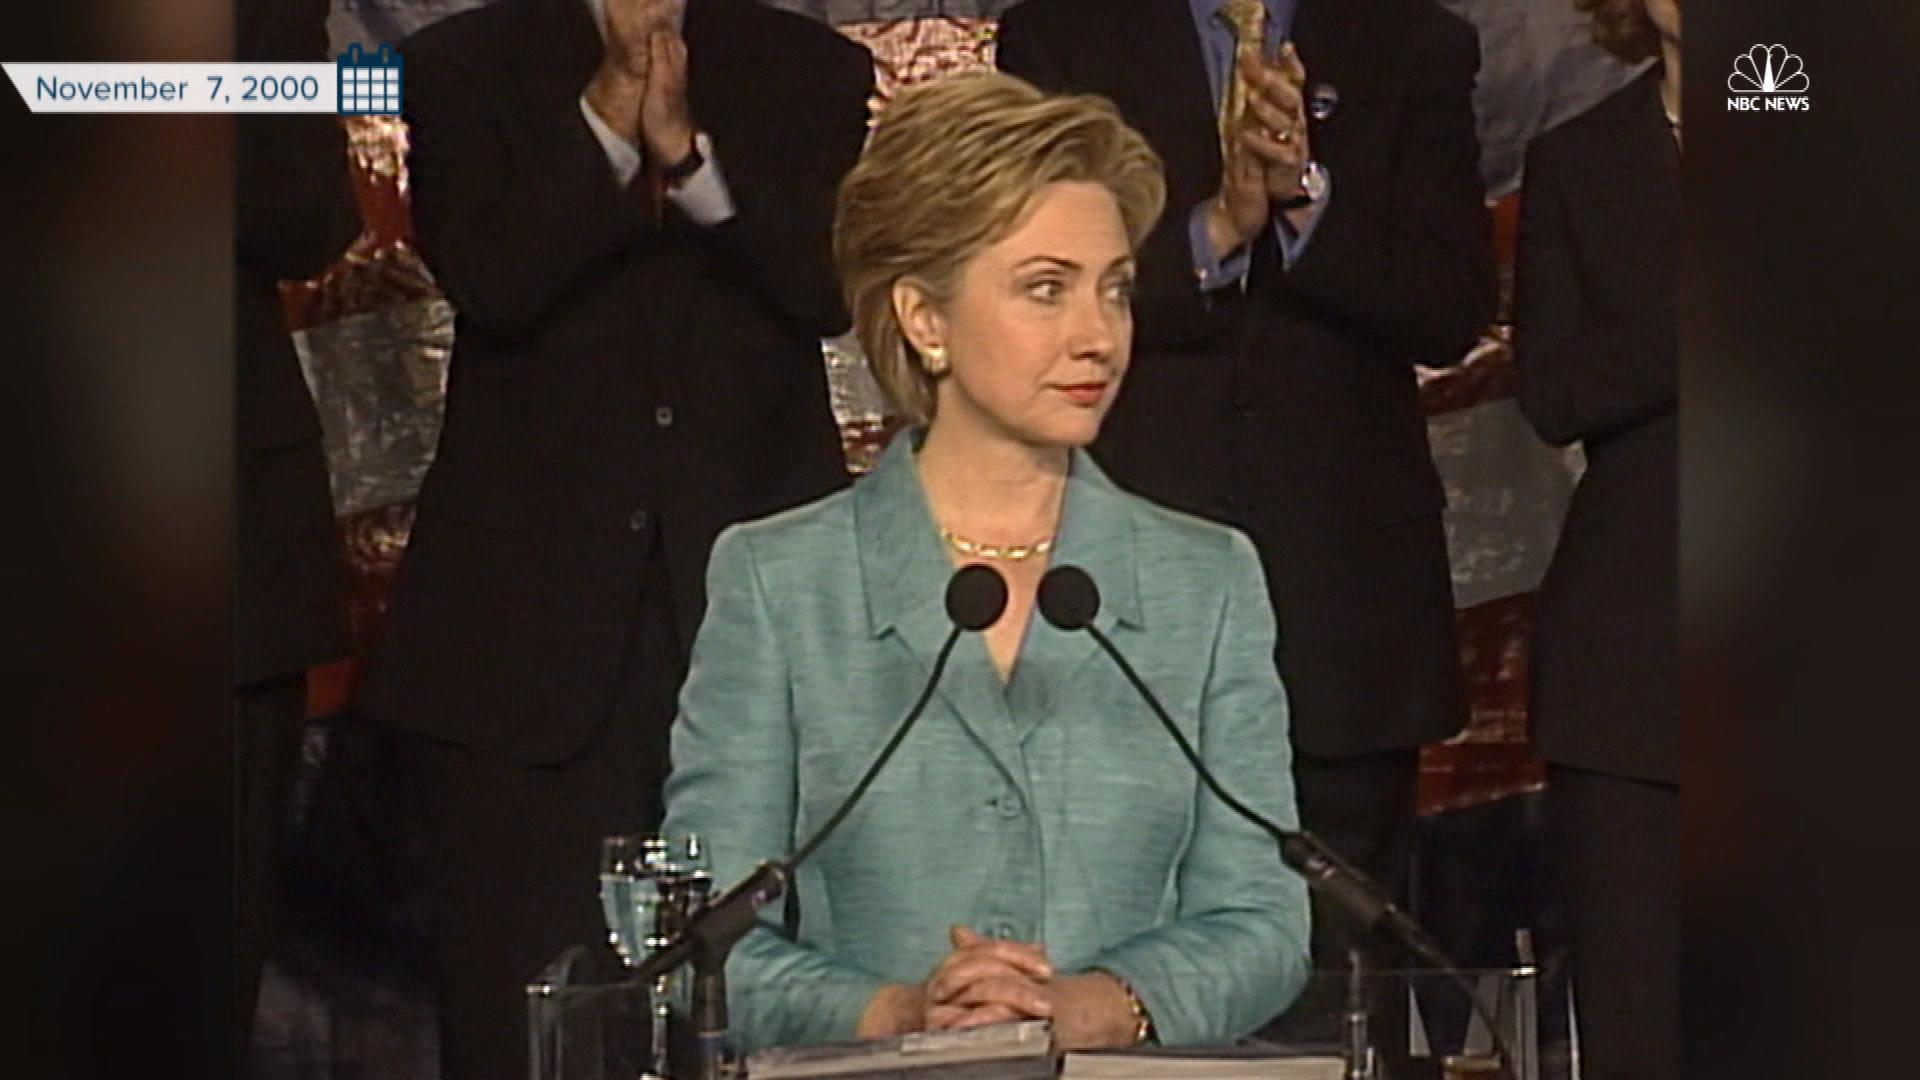 Flashback: Hillary Clinton as Senator - NBC News